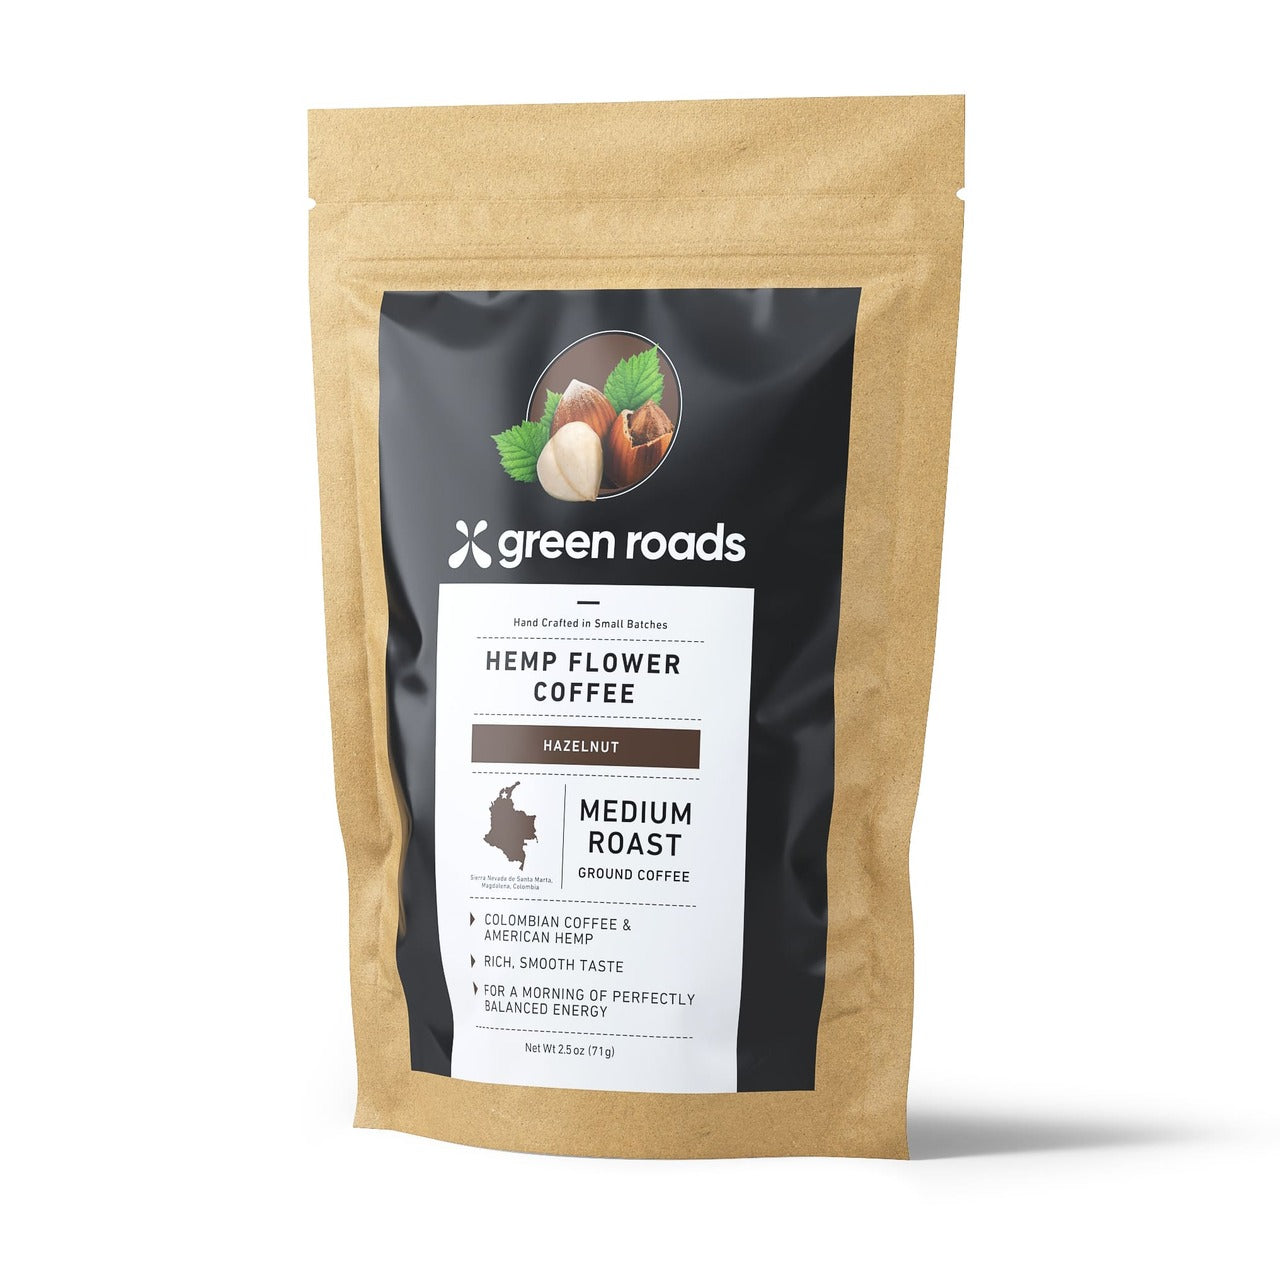 Hemp CBD Coffee - Medium Roast Hazelnut Hemp Flower Coffee 2.5 oz bag